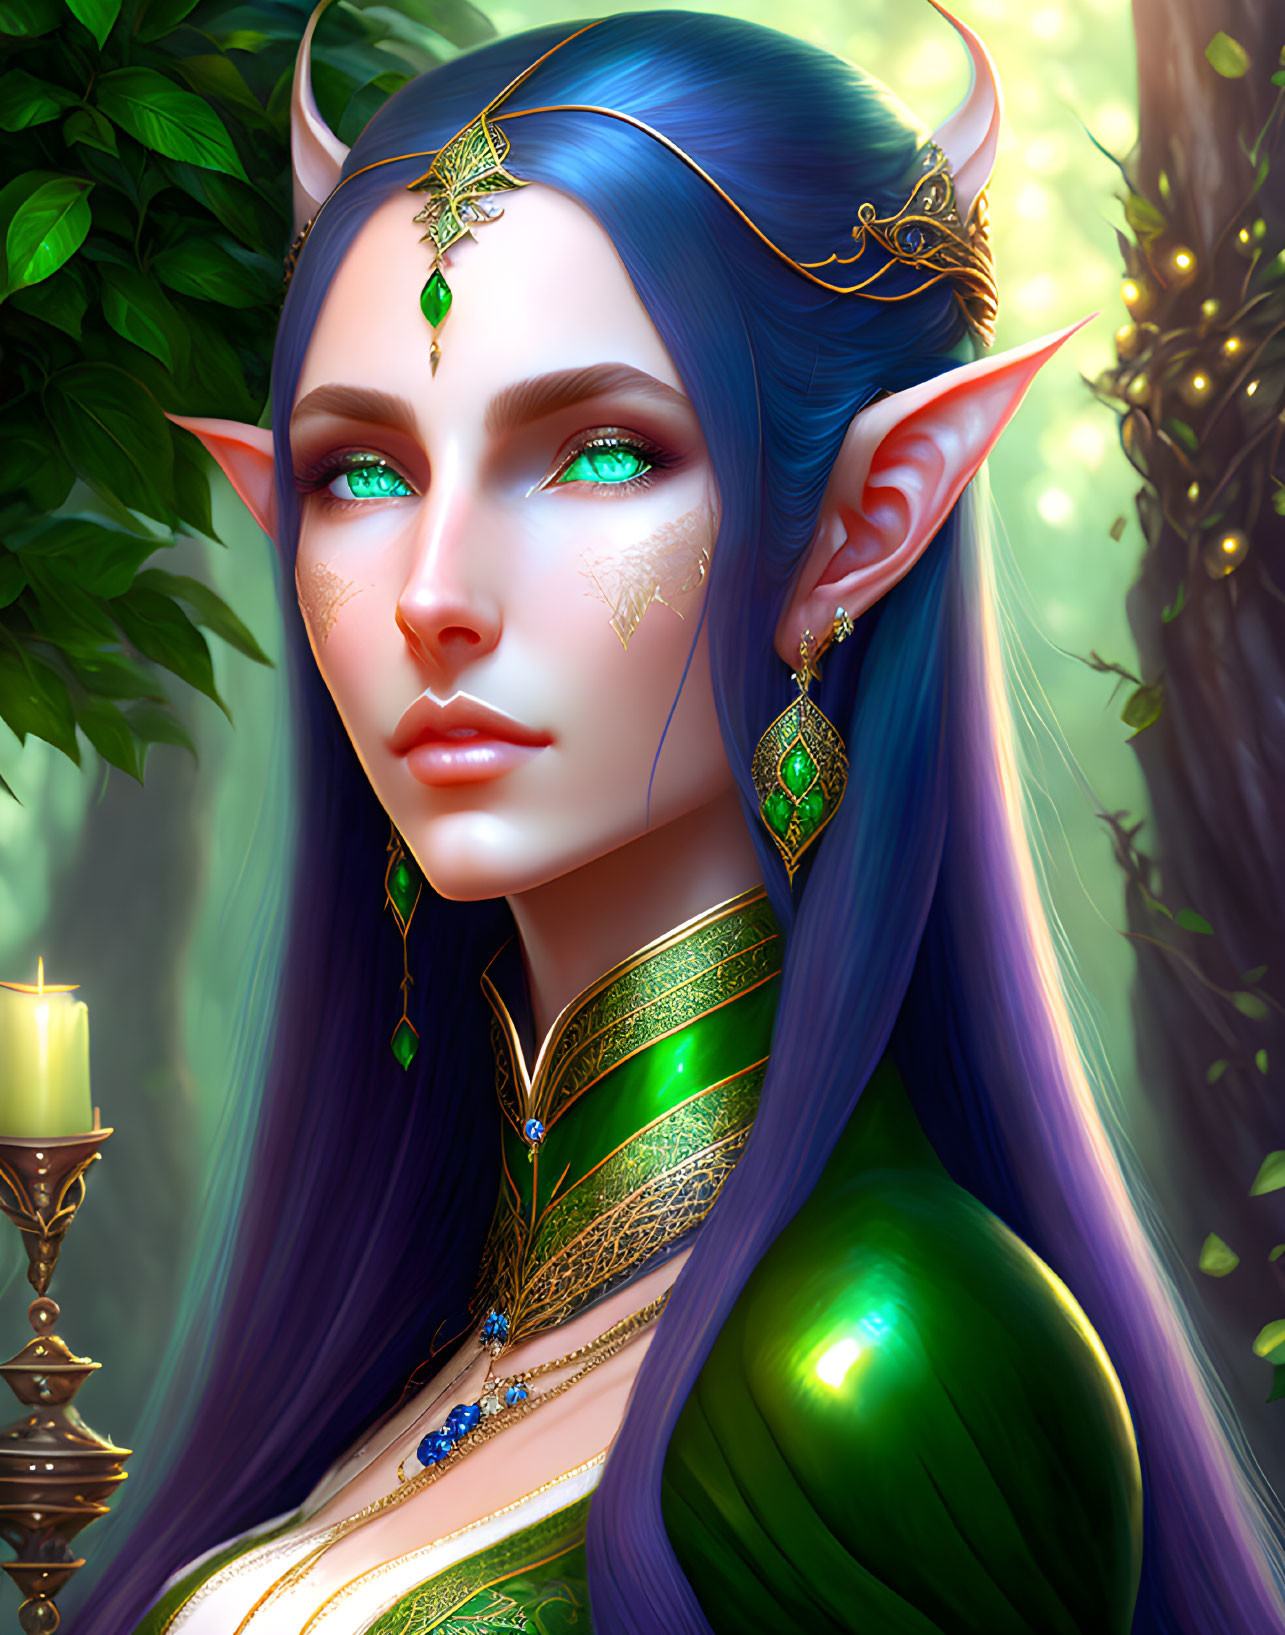 Fantasy elf digital portrait with blue hair and green eyes